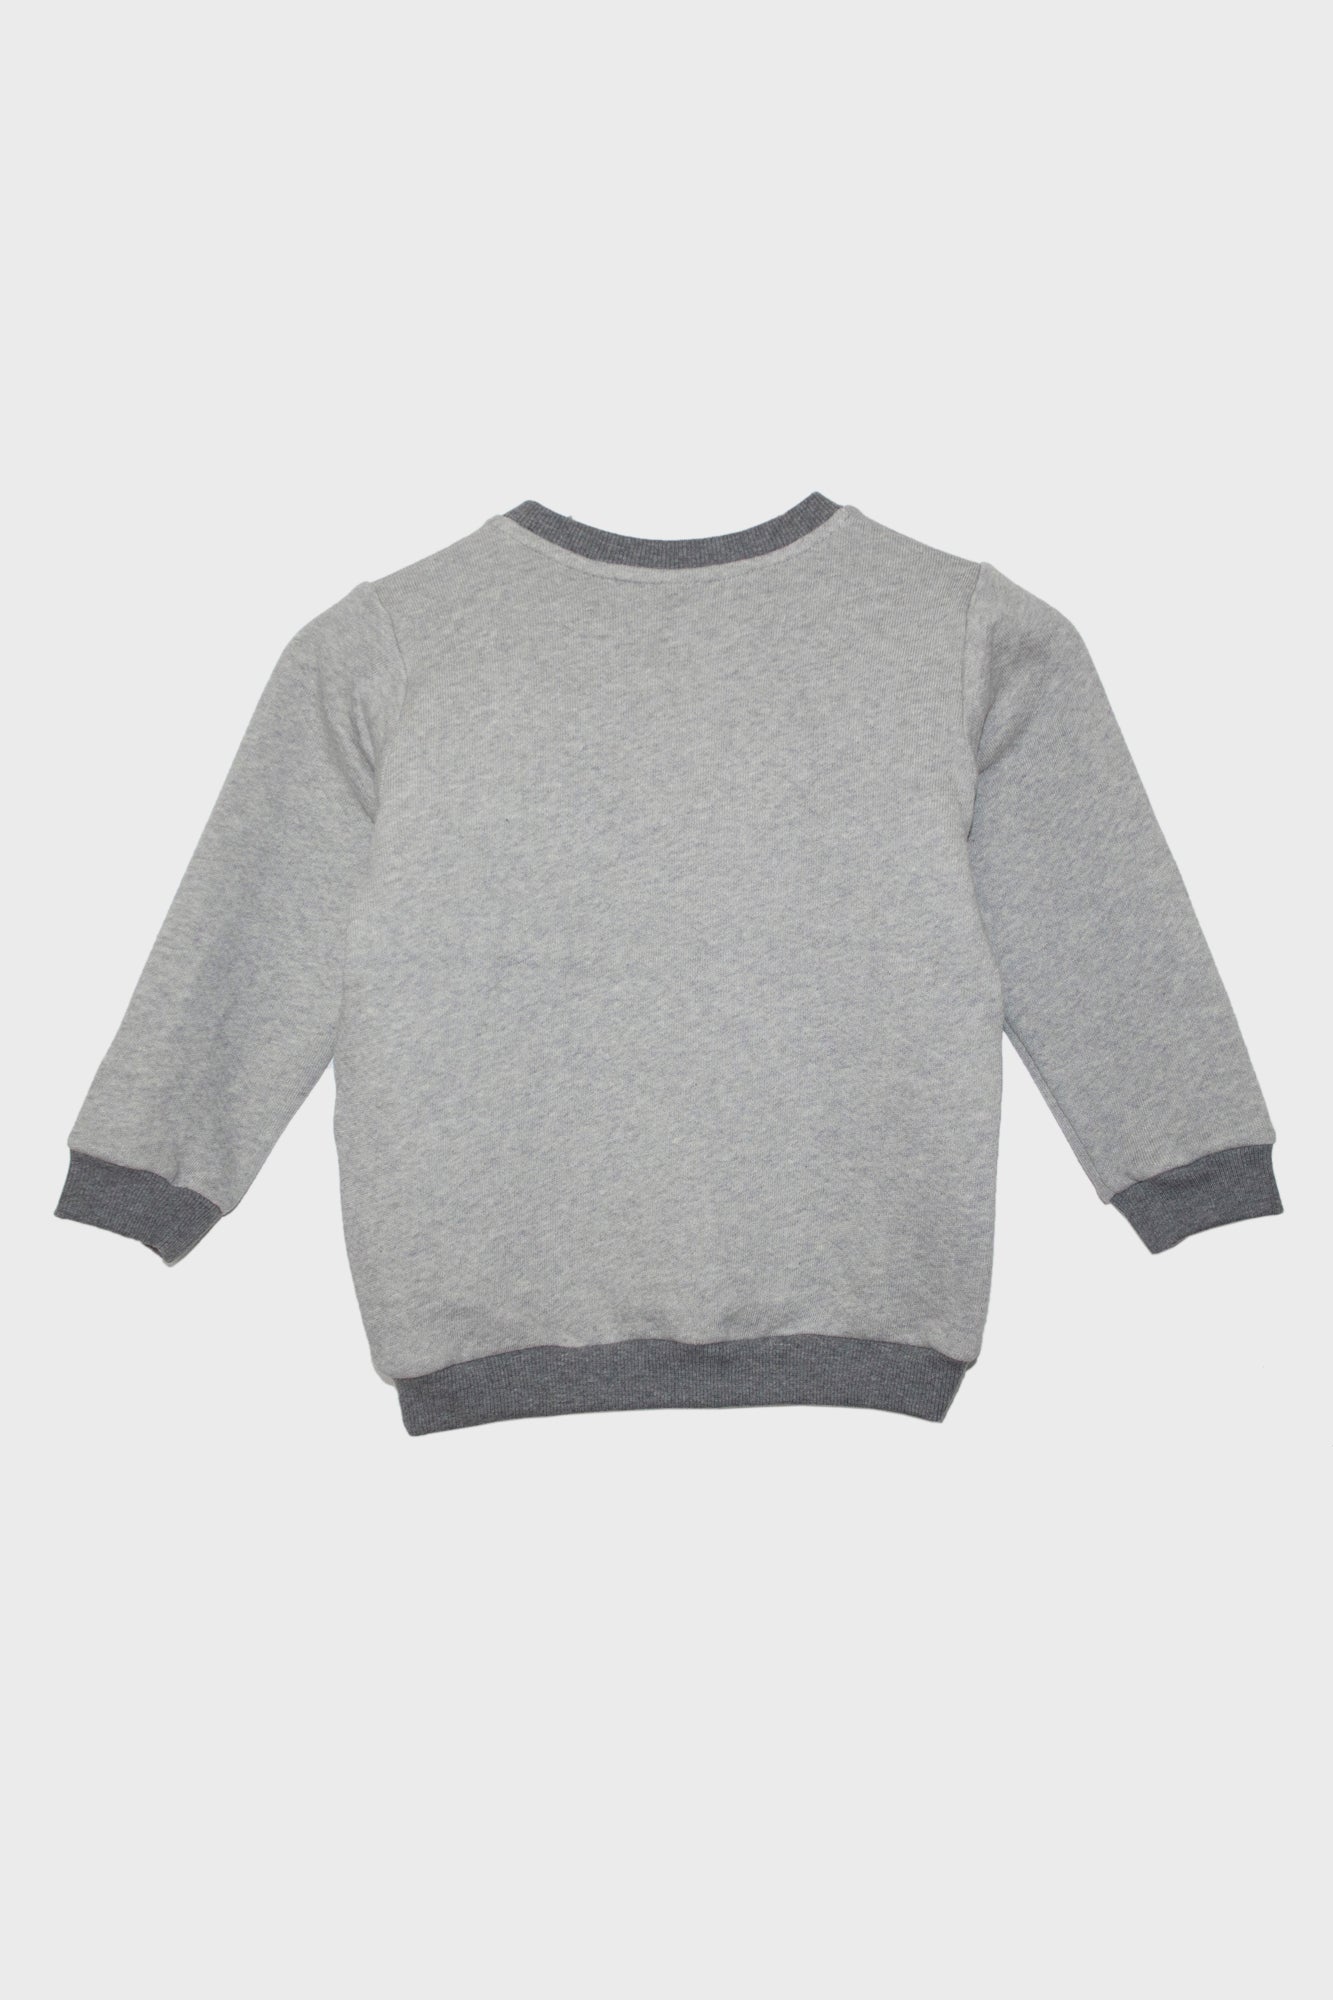 Kid’s One Wolf knitted sweater, grey/dark grey logo